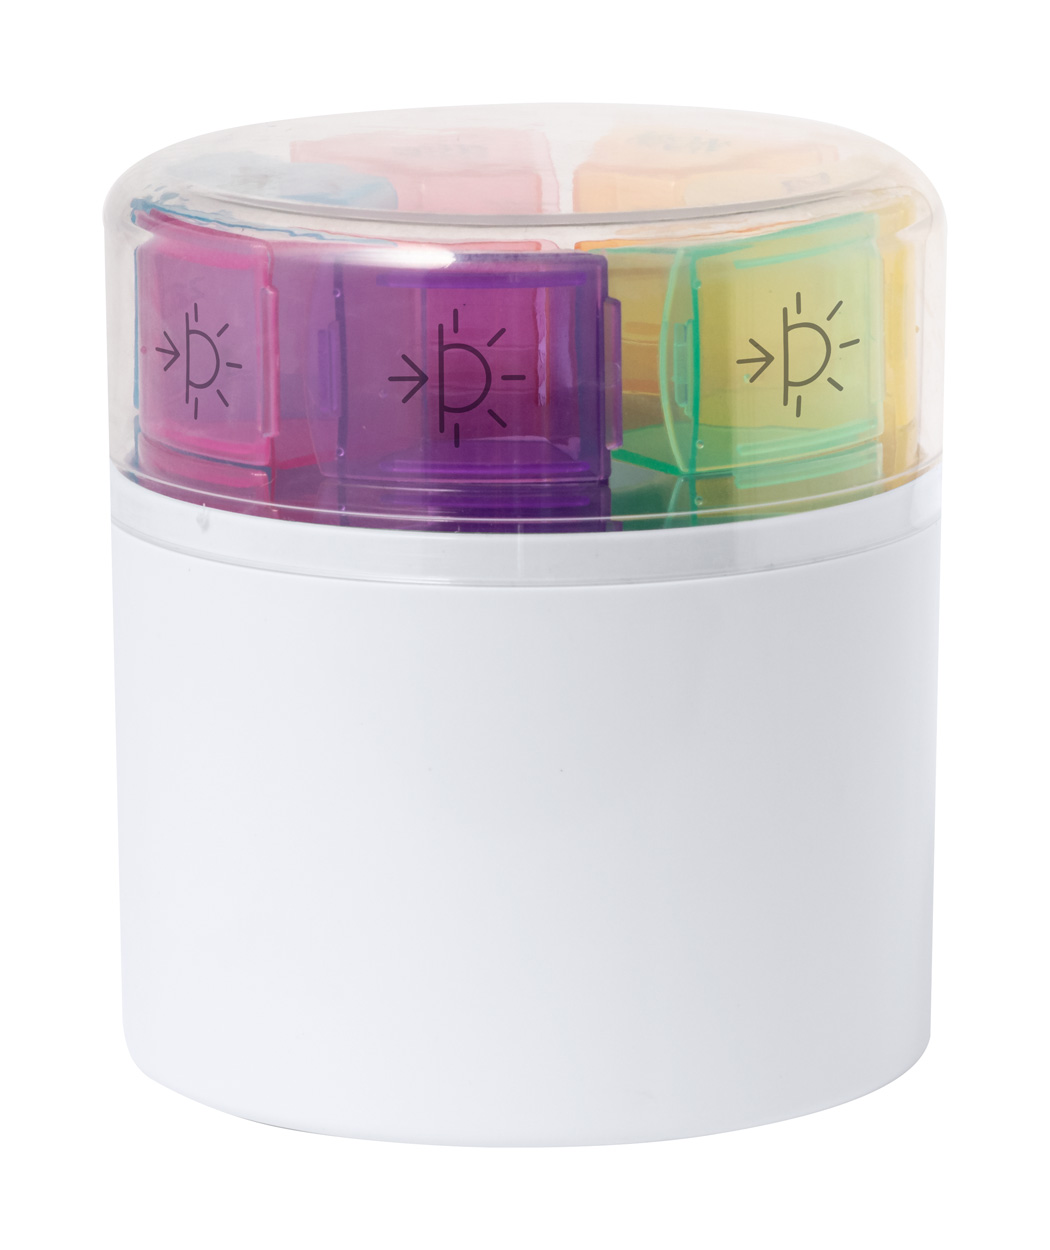 Ablix pillbox Multi-color